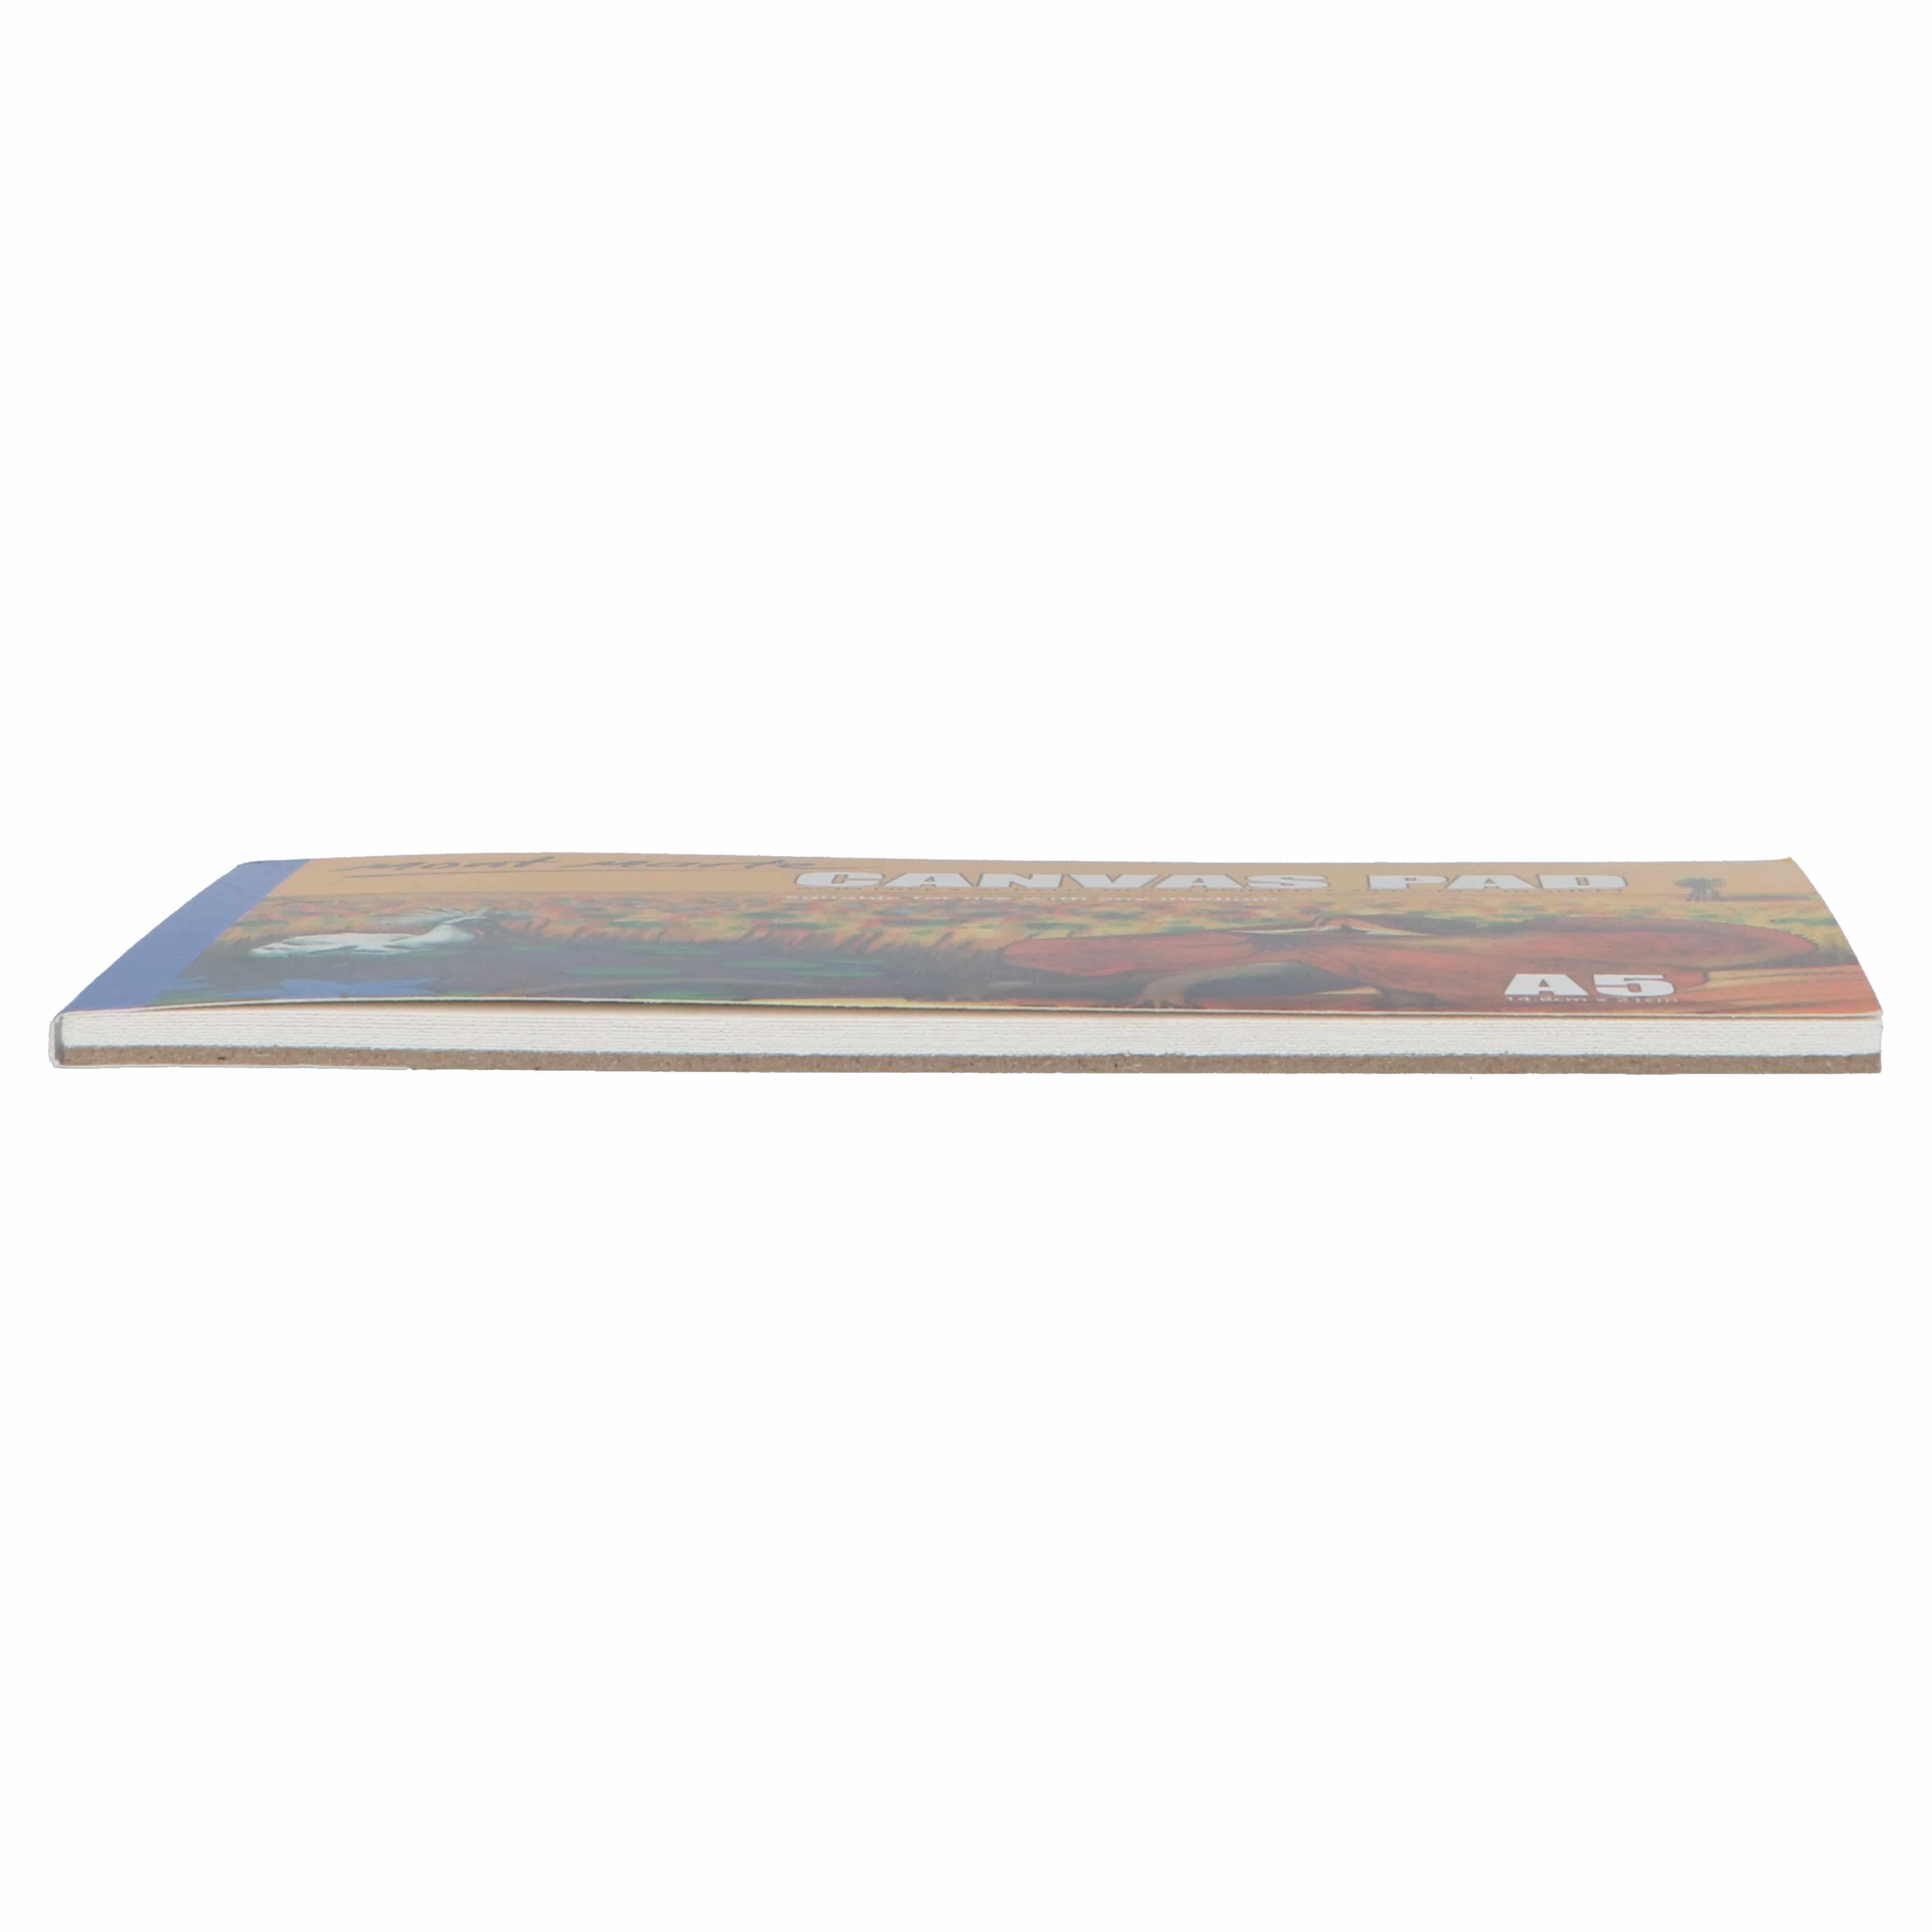 Mont Marte® Canvas blok 10st A5 - 280 grams papier - schetsboek